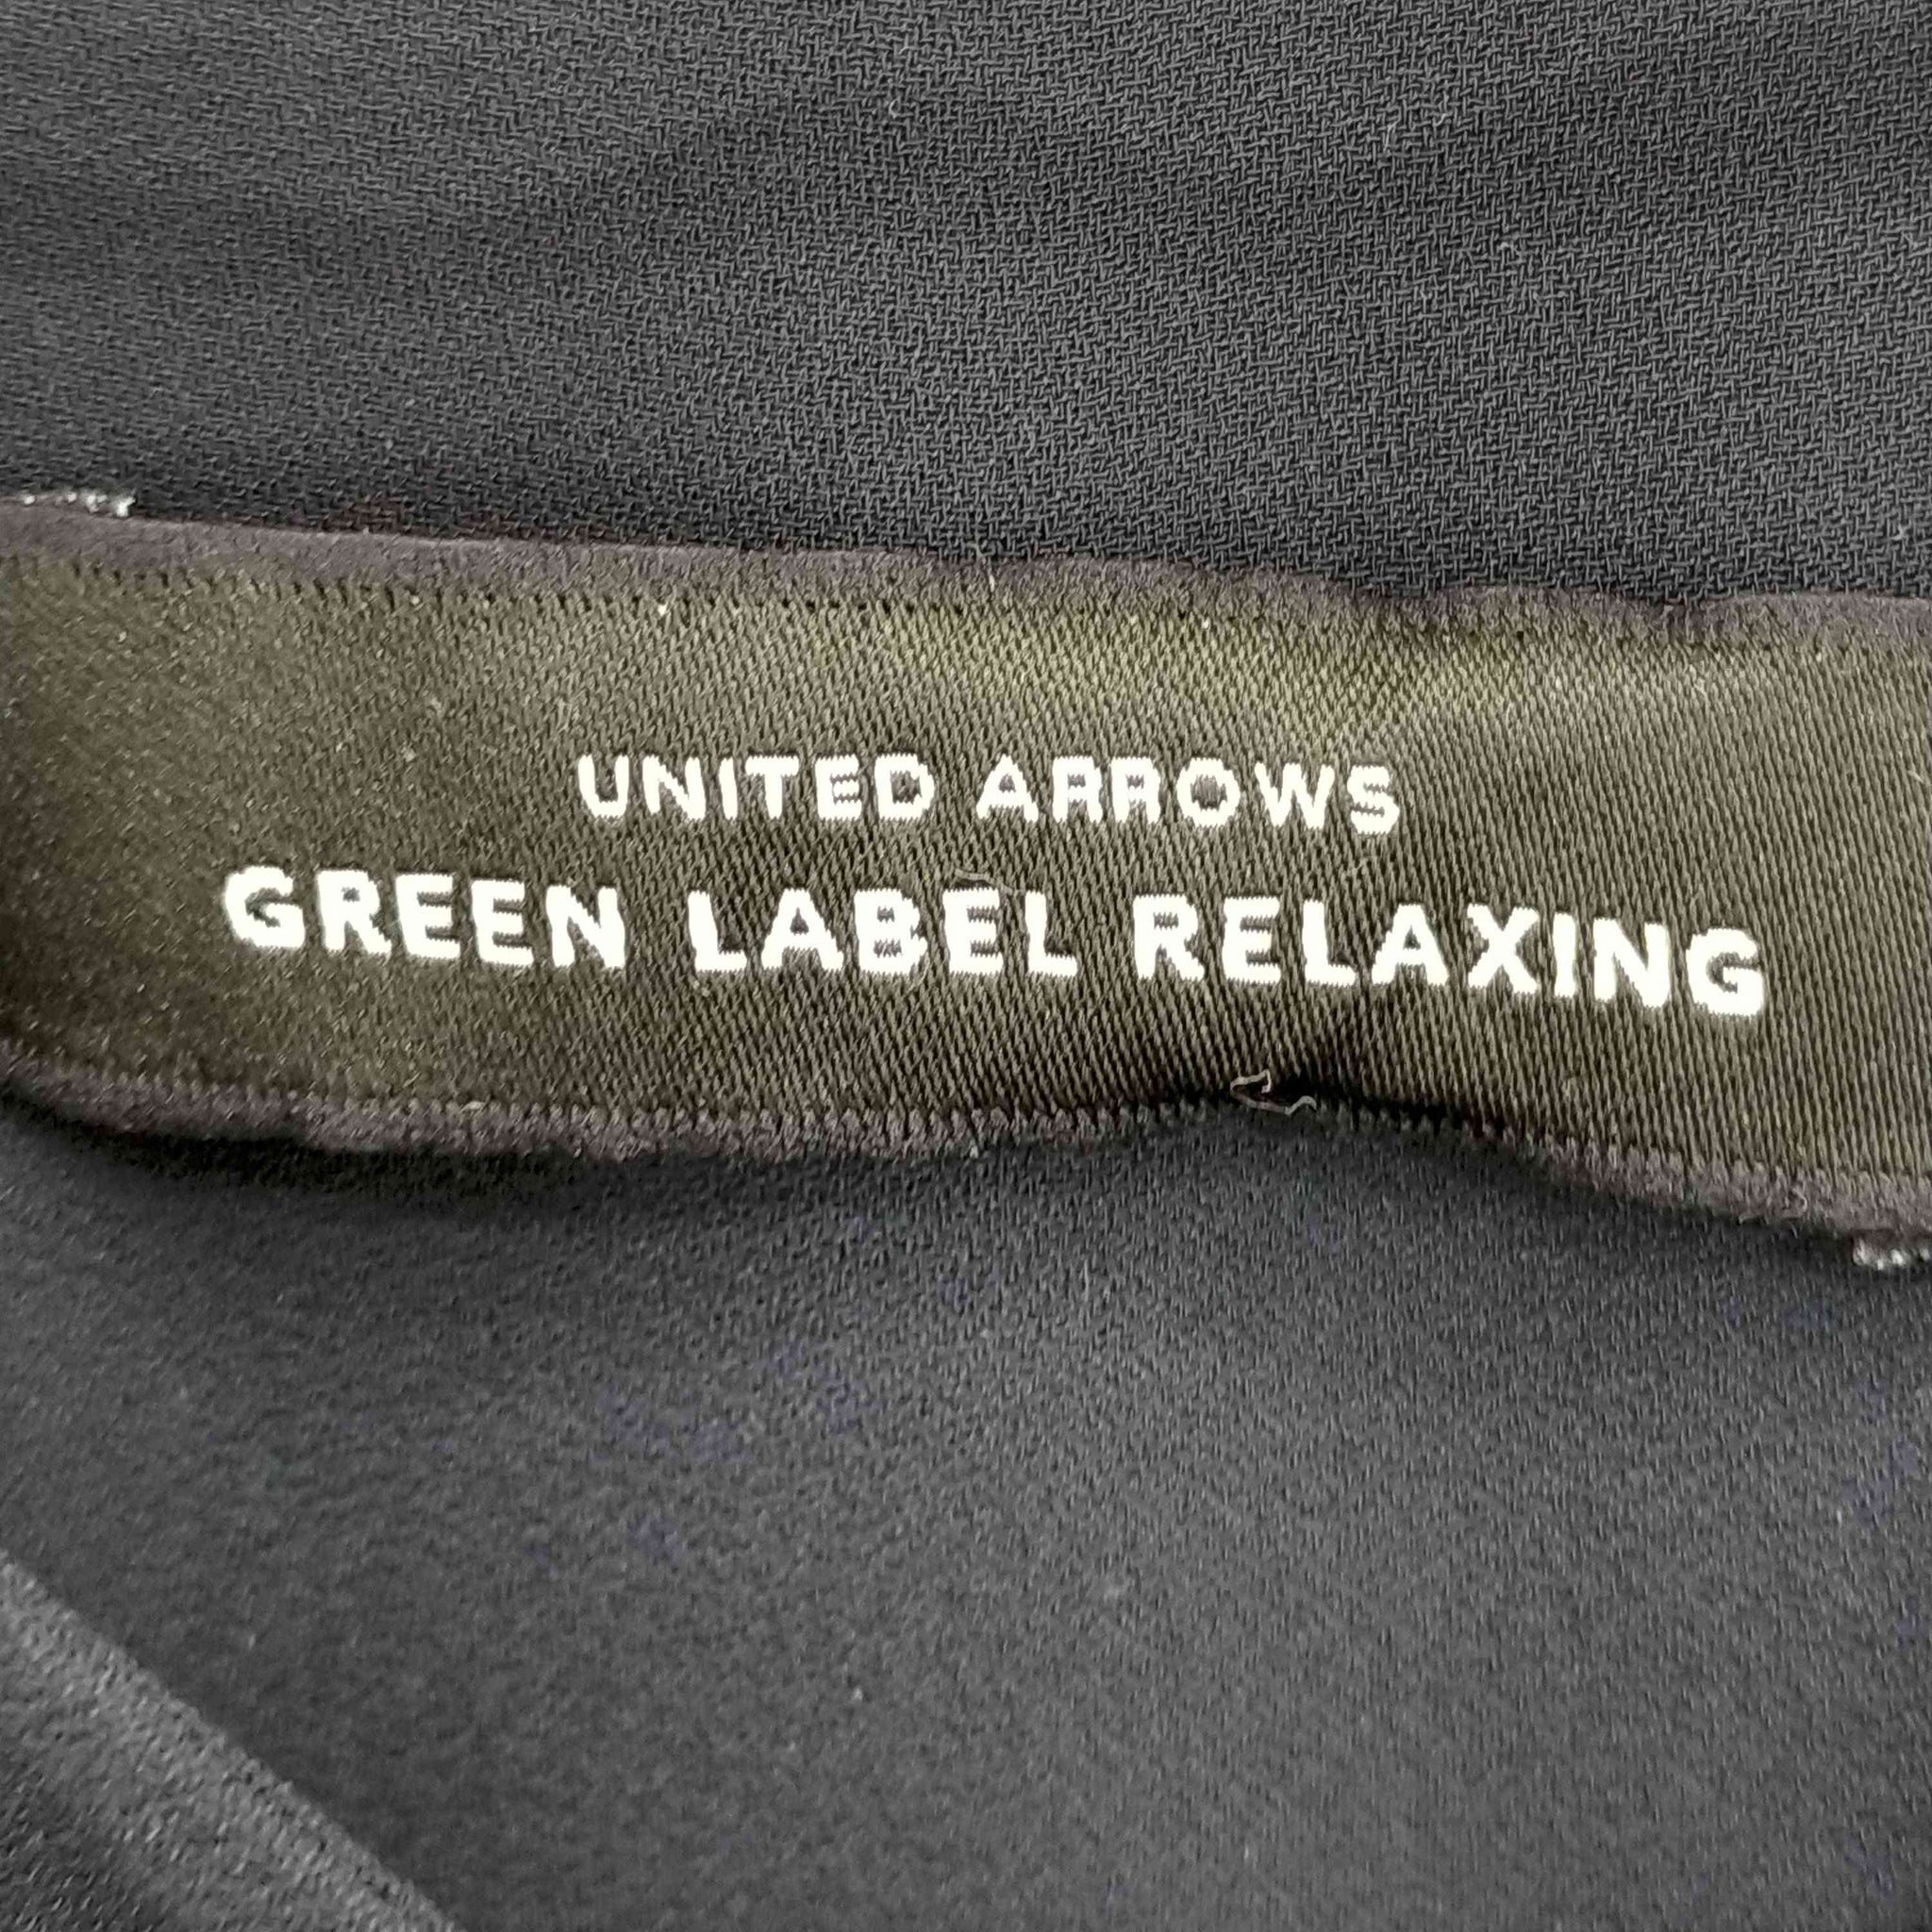 UNITED ARROWS green label relaxing(ユナイテッドアローズグリーンレーベルリラクシング)D P JKIN Vネック ブラウス